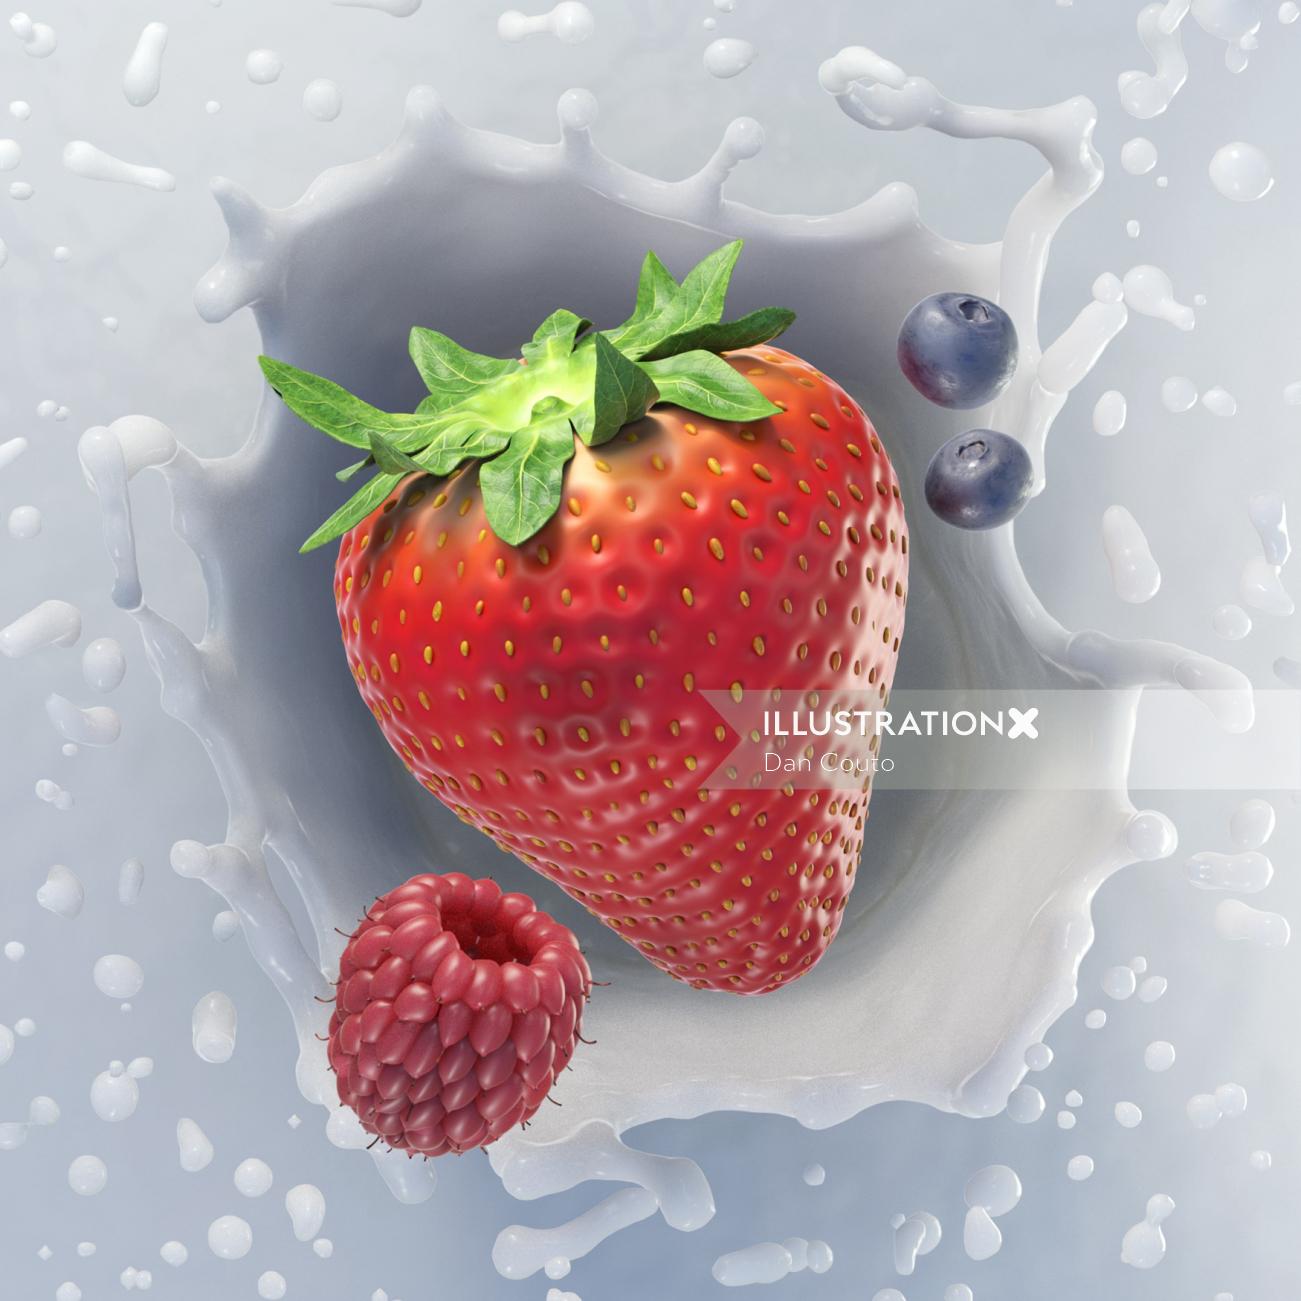 Milk and fruit digital imagery